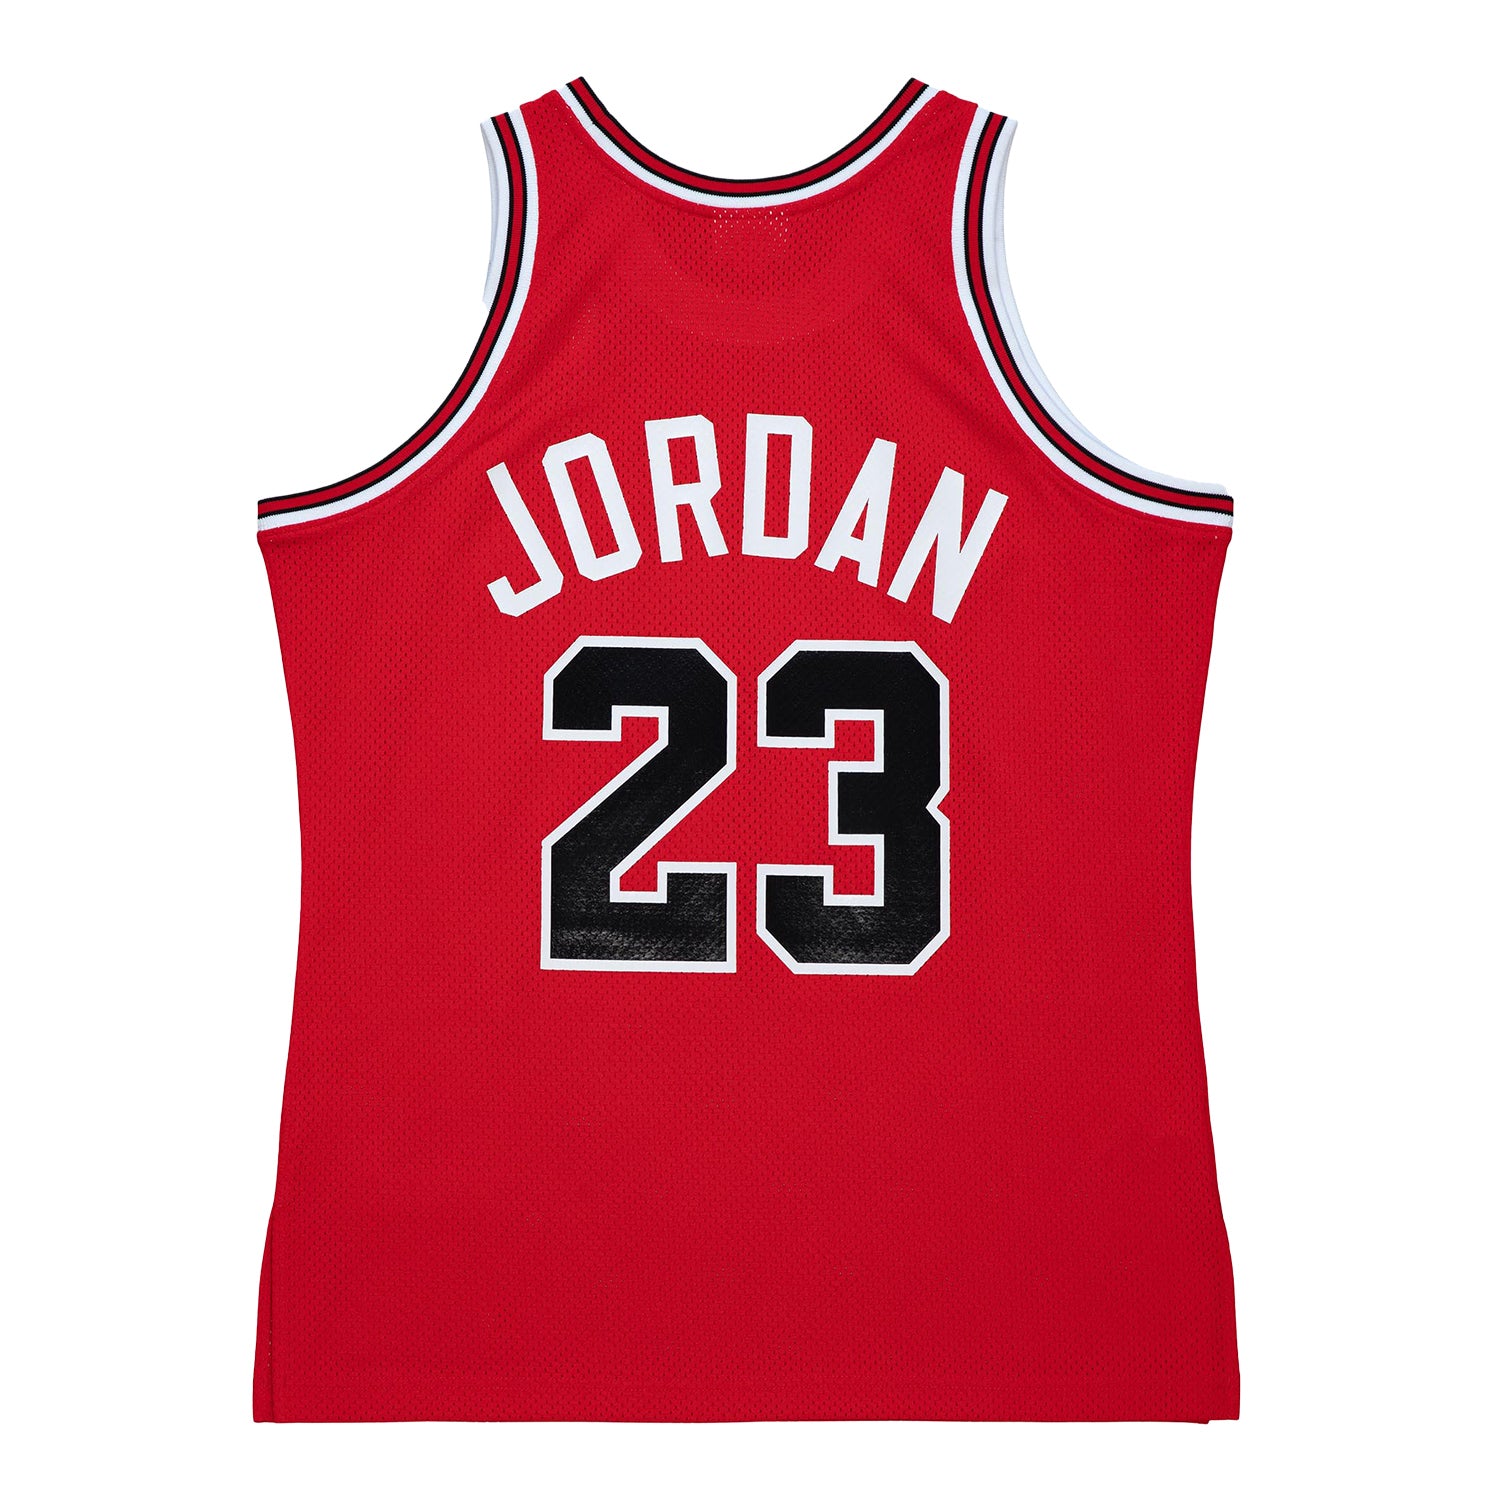 Michael Air Jordan Chicago White Sox Rawlings Authentic Jersey Size 48  Bulls !